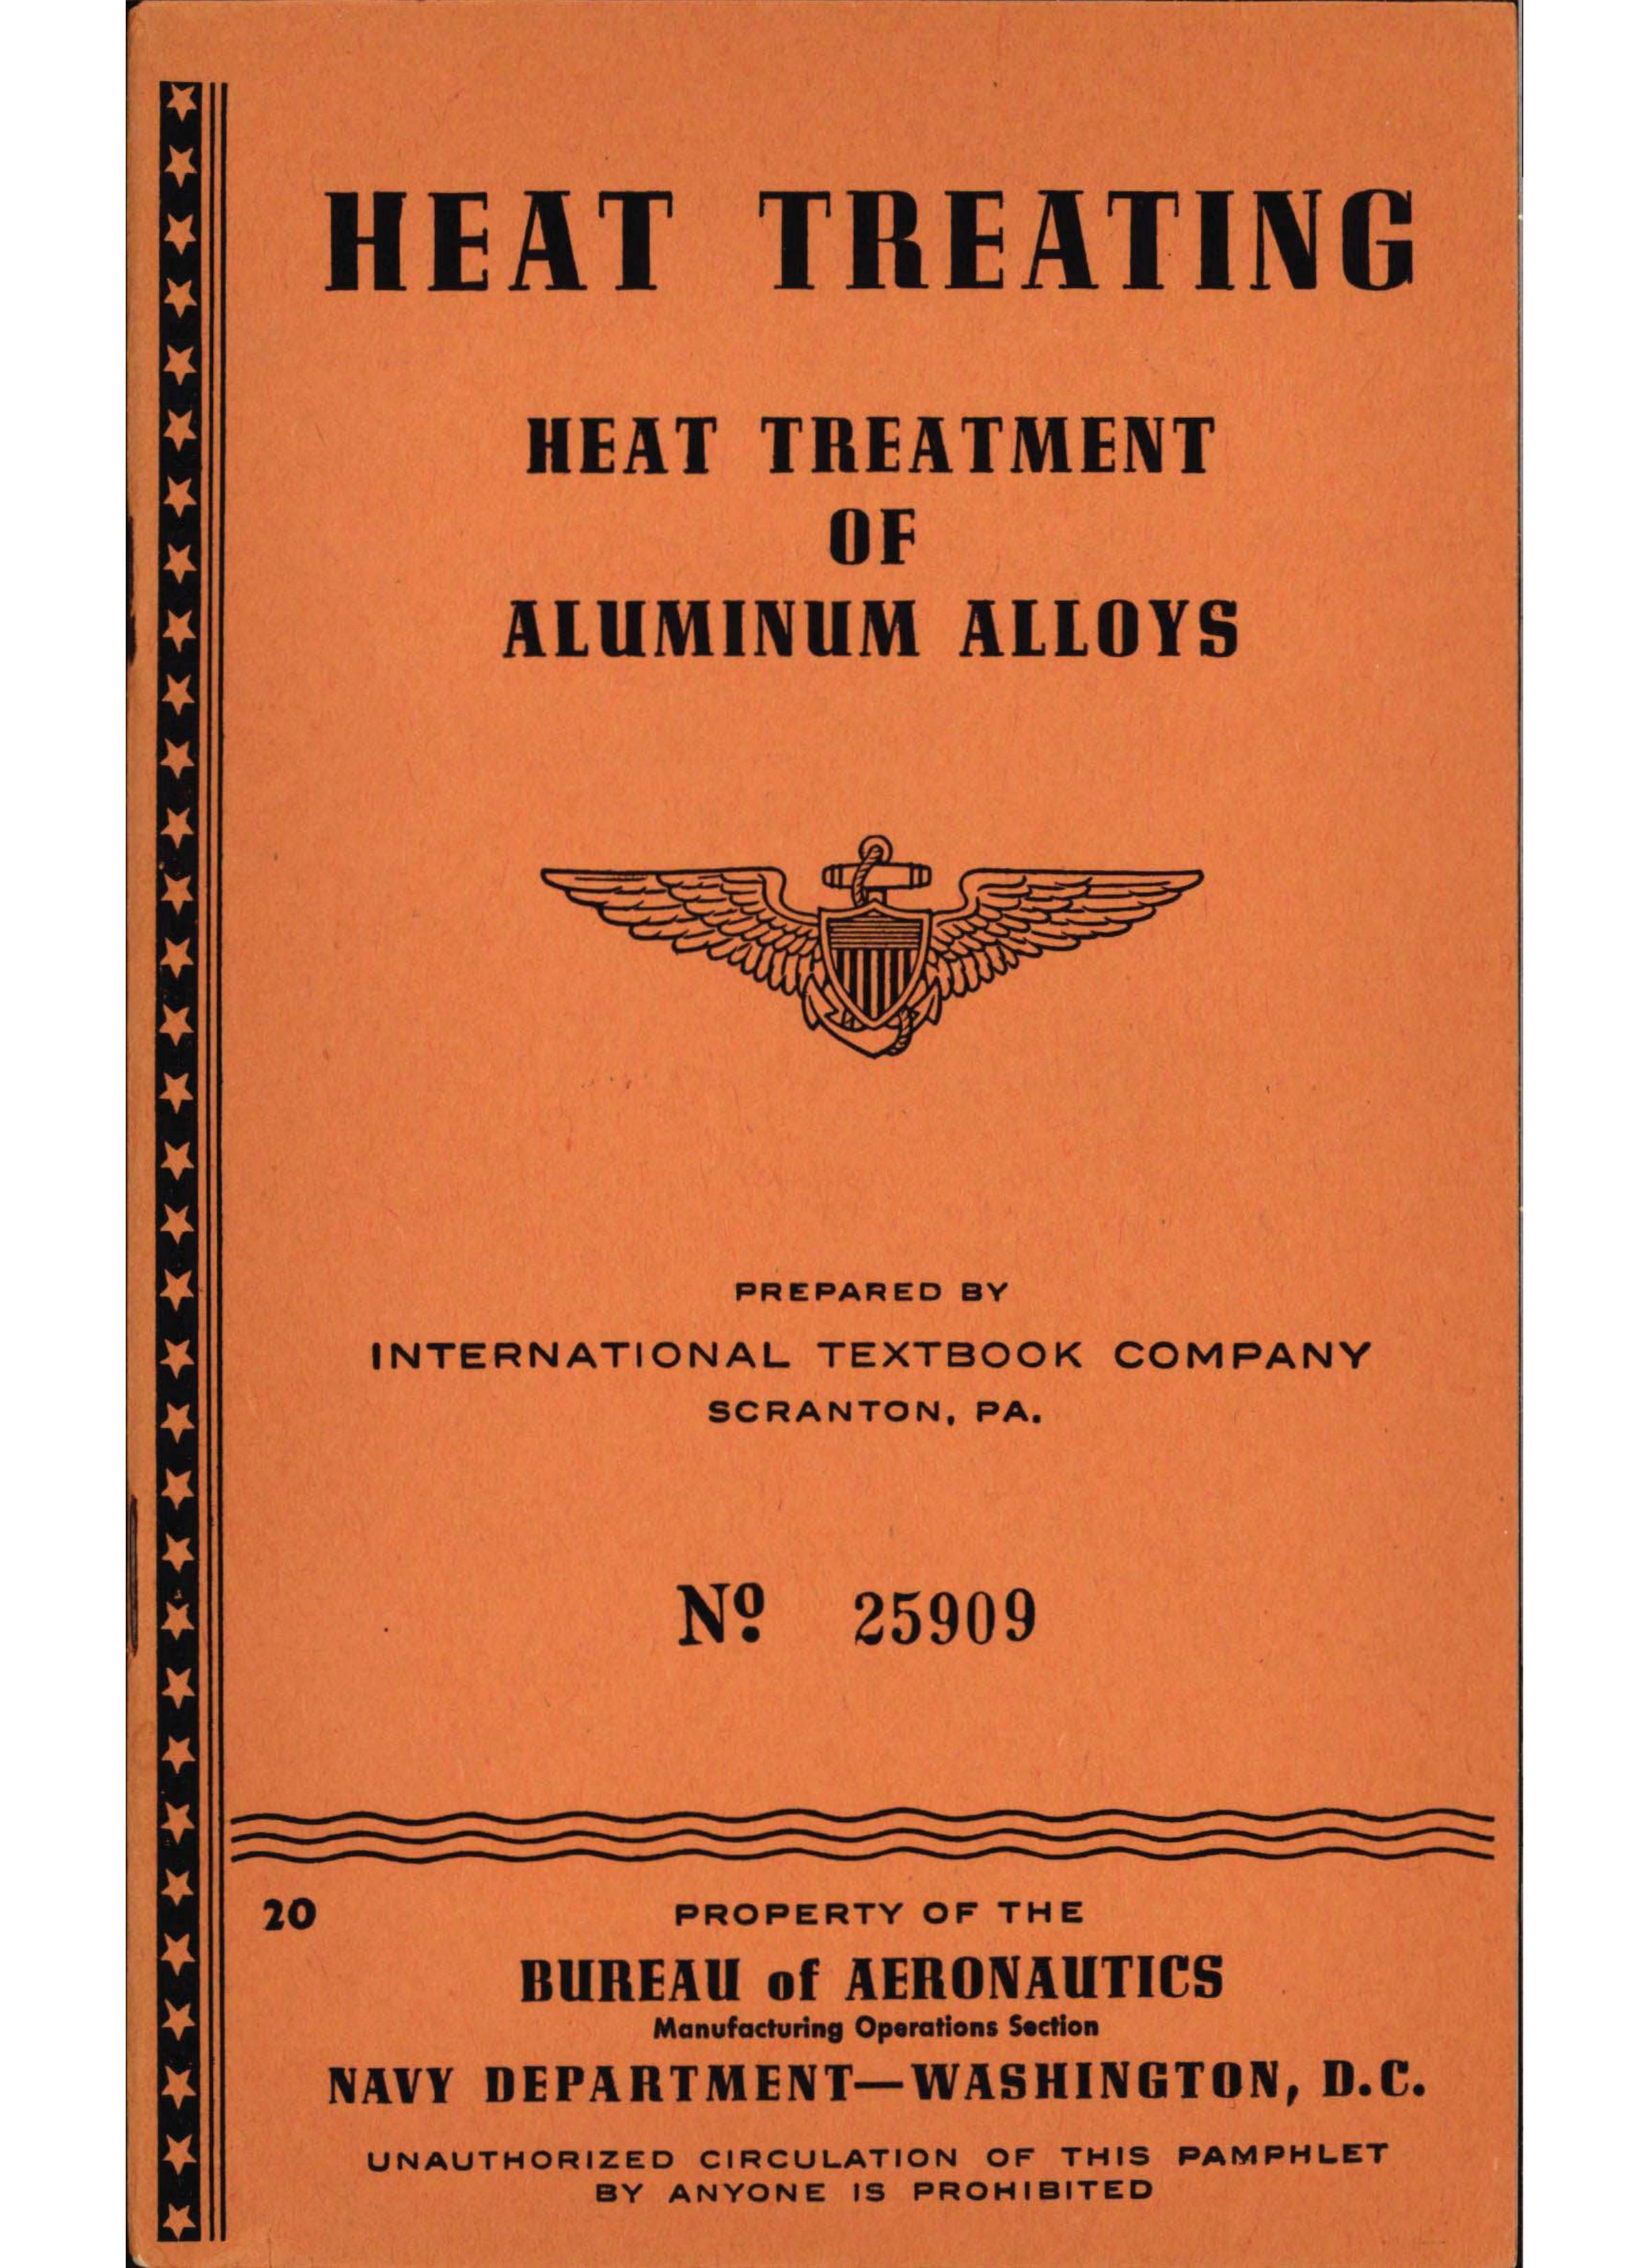 Sample page 1 from AirCorps Library document: Heat Treating - Aluminum Alloys - Bureau of Aeronautics